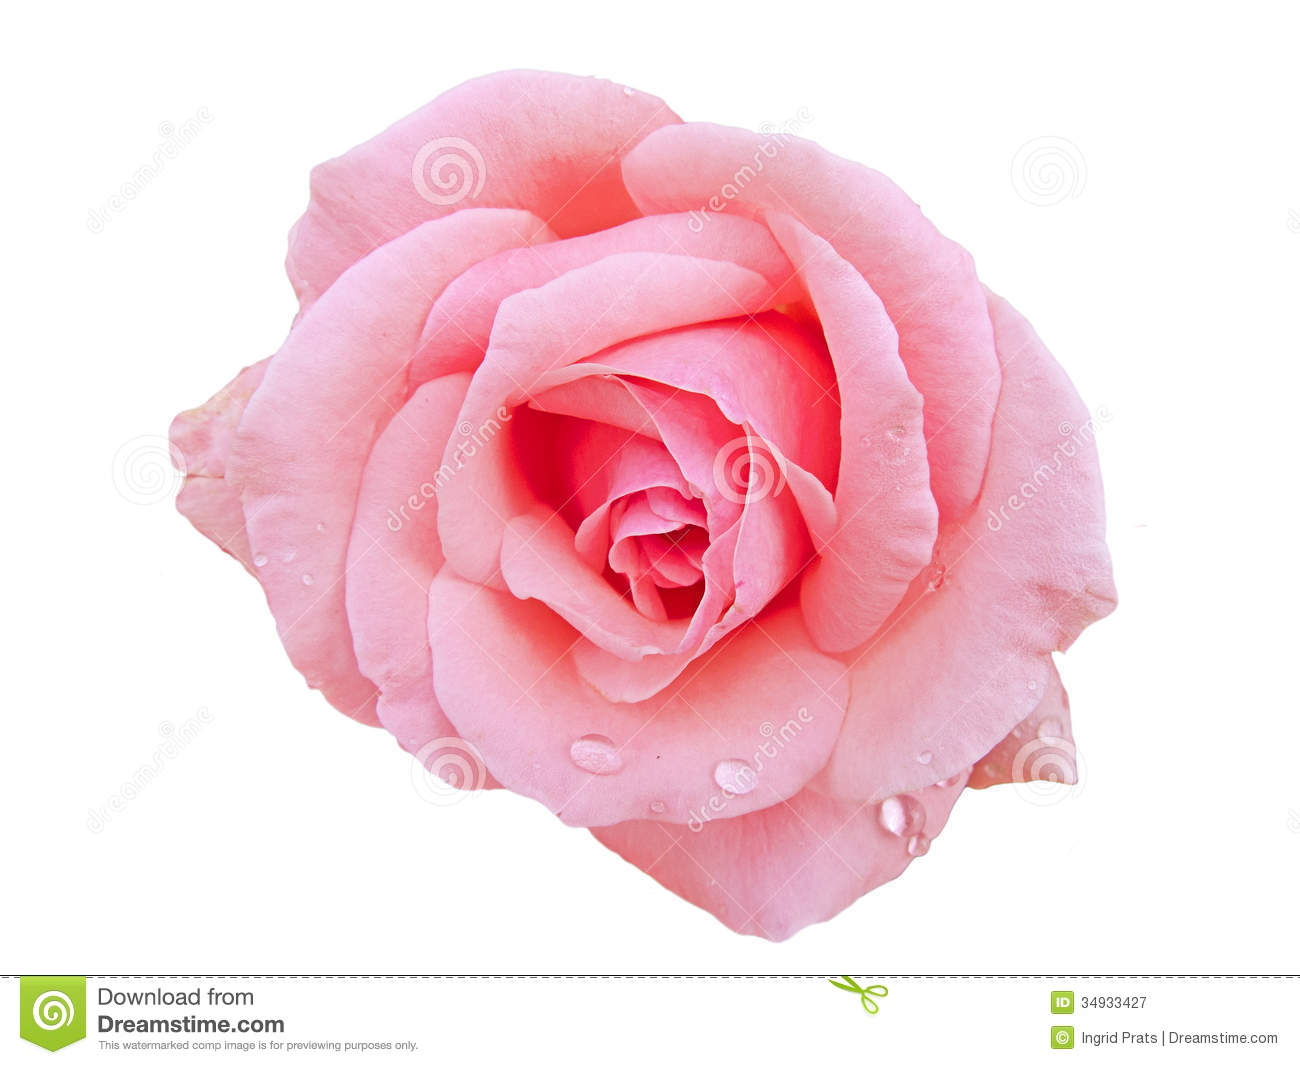 habrumalas Pink Rose White Background Images